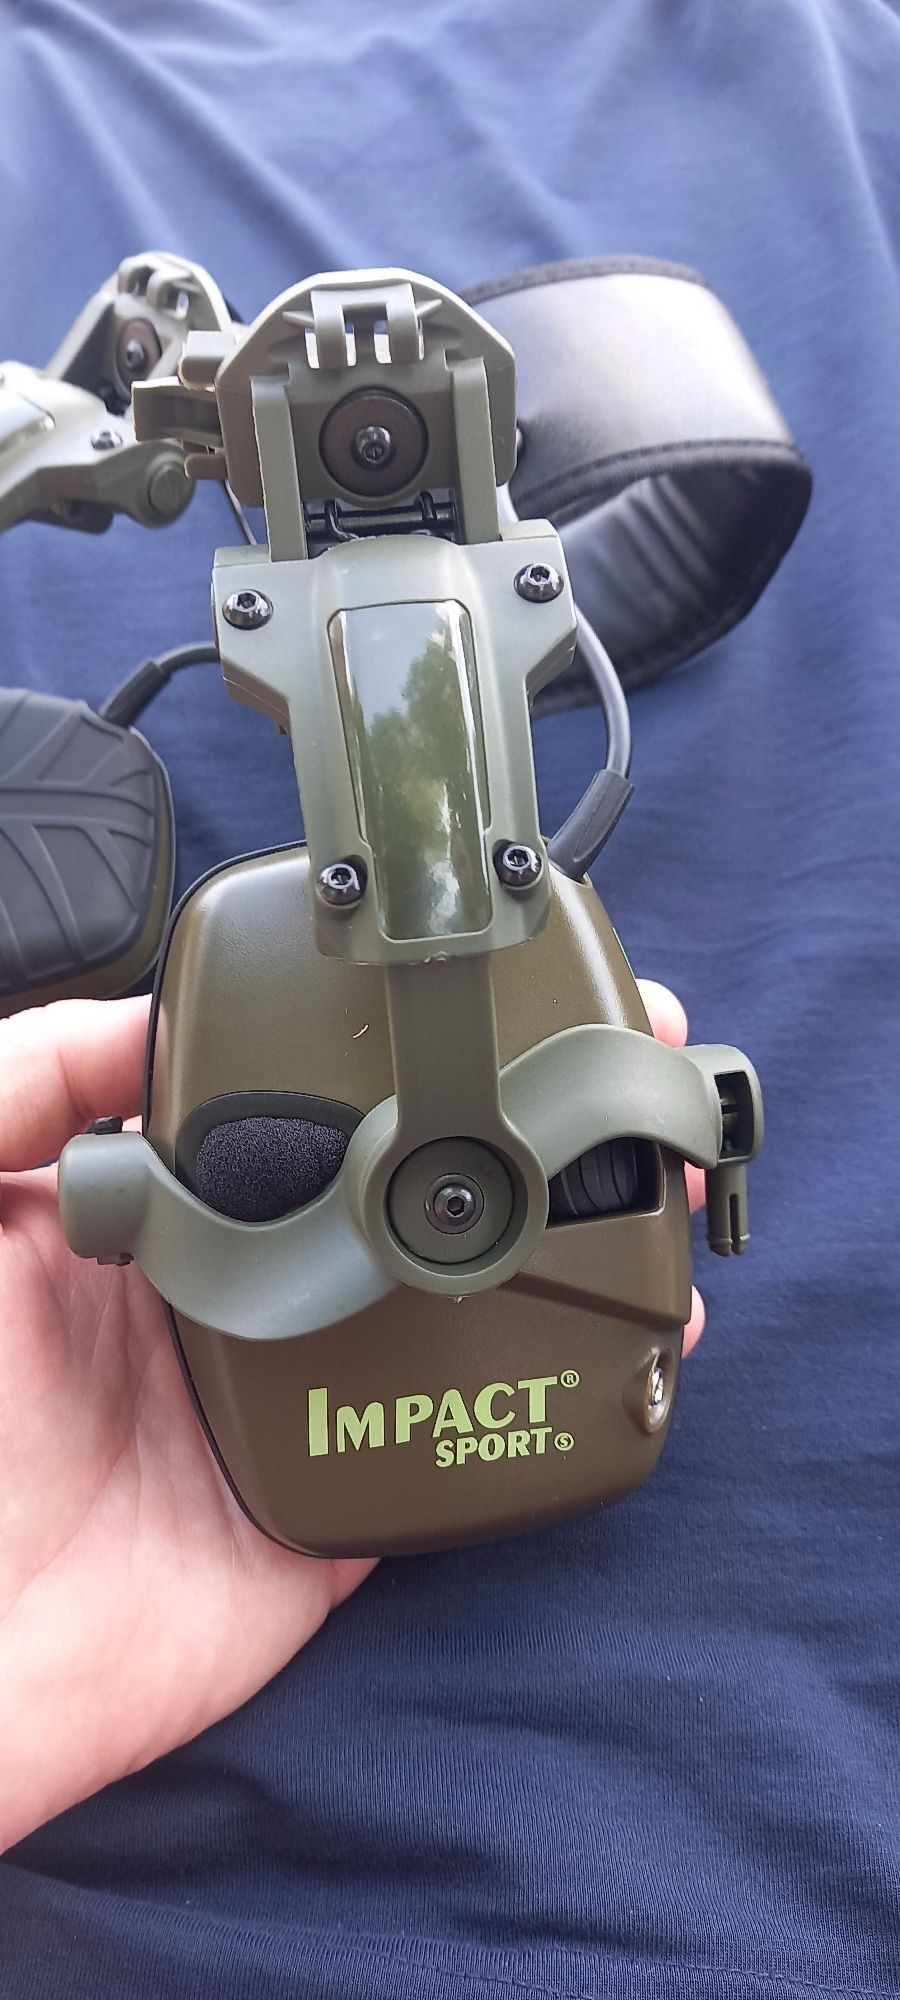 Активные наушники Howard Impact +крепление на шлем Наушники Импакт